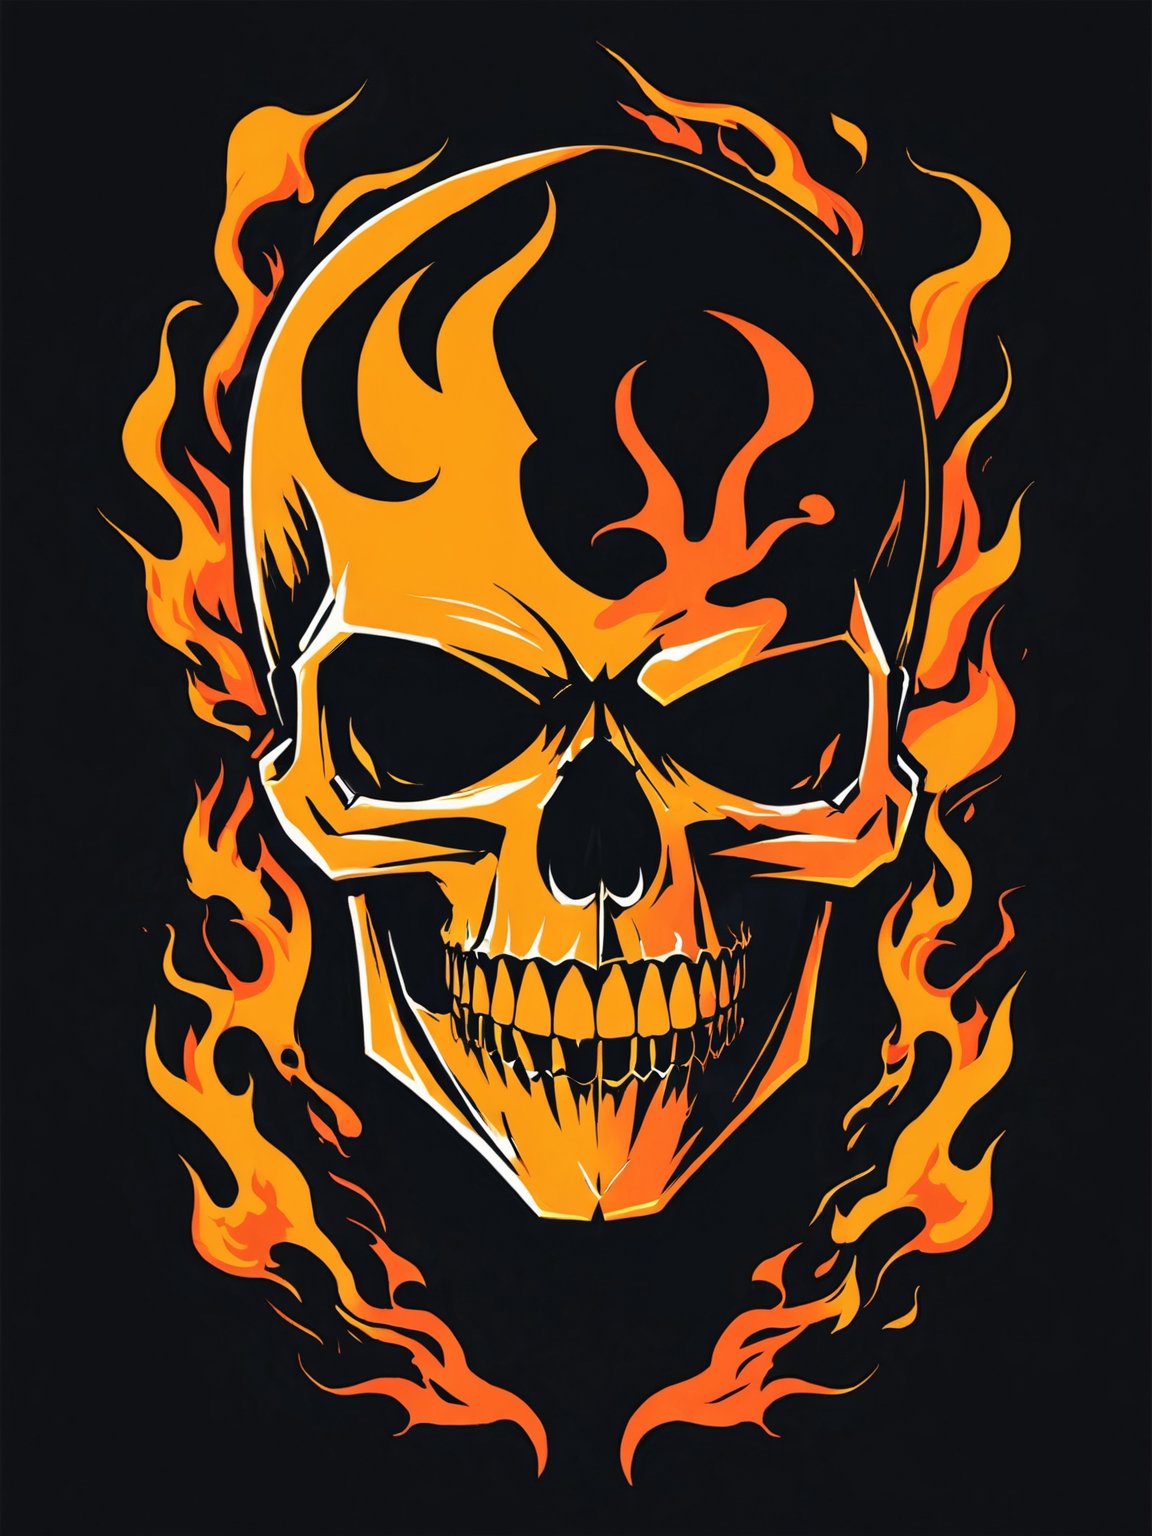 AiArtV,t-shirt design, simple background,1boy,male focus,teeth,black background,fire,skull,burning, vector illustration